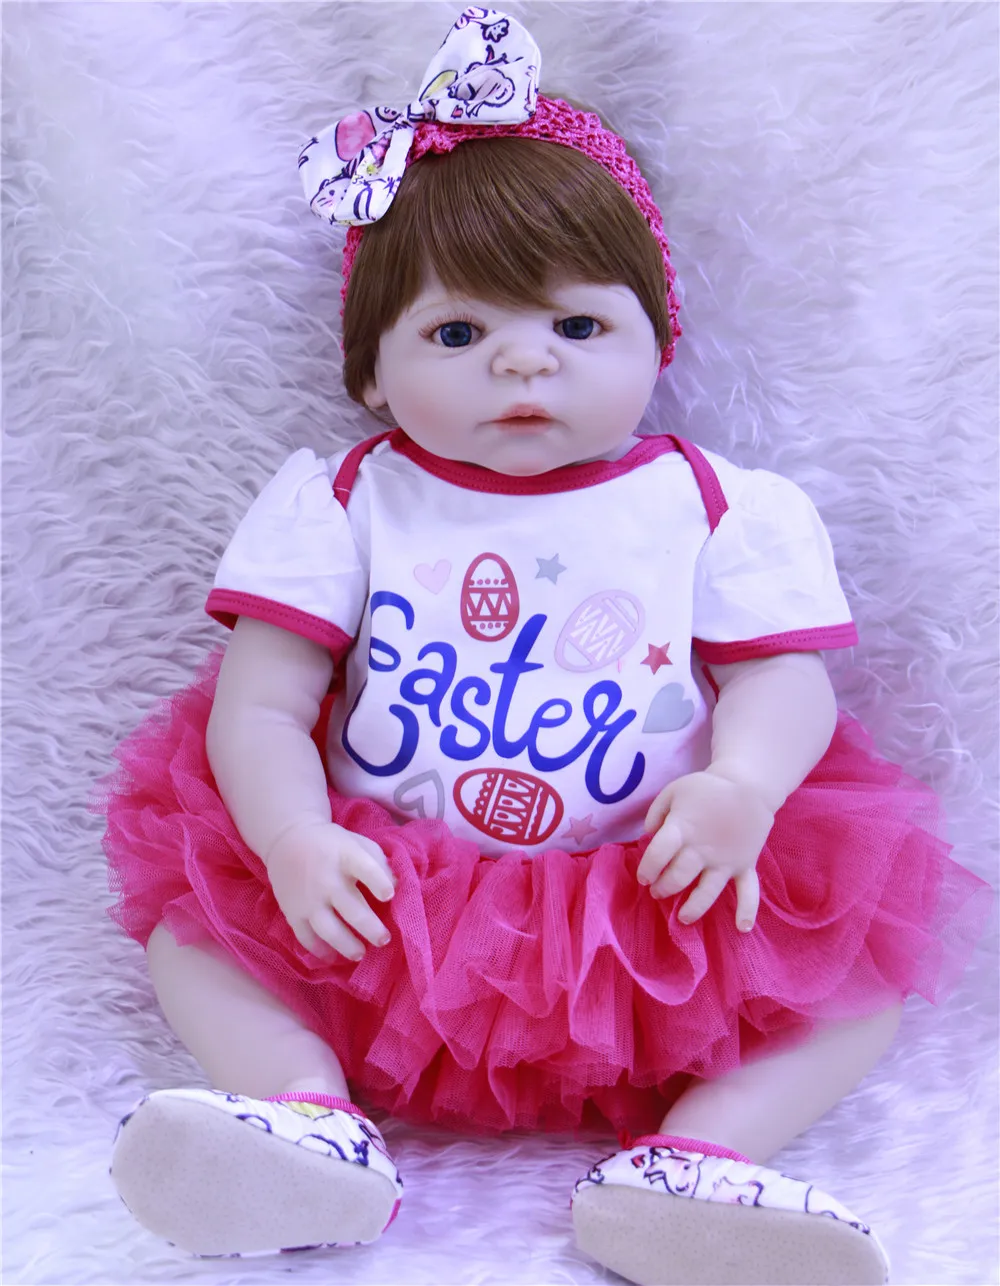 

DollMai bebes reborn girl dolls whole silicone body reborn baby dolls toys for girls kids gift bonecas juguetes brinquedo menina